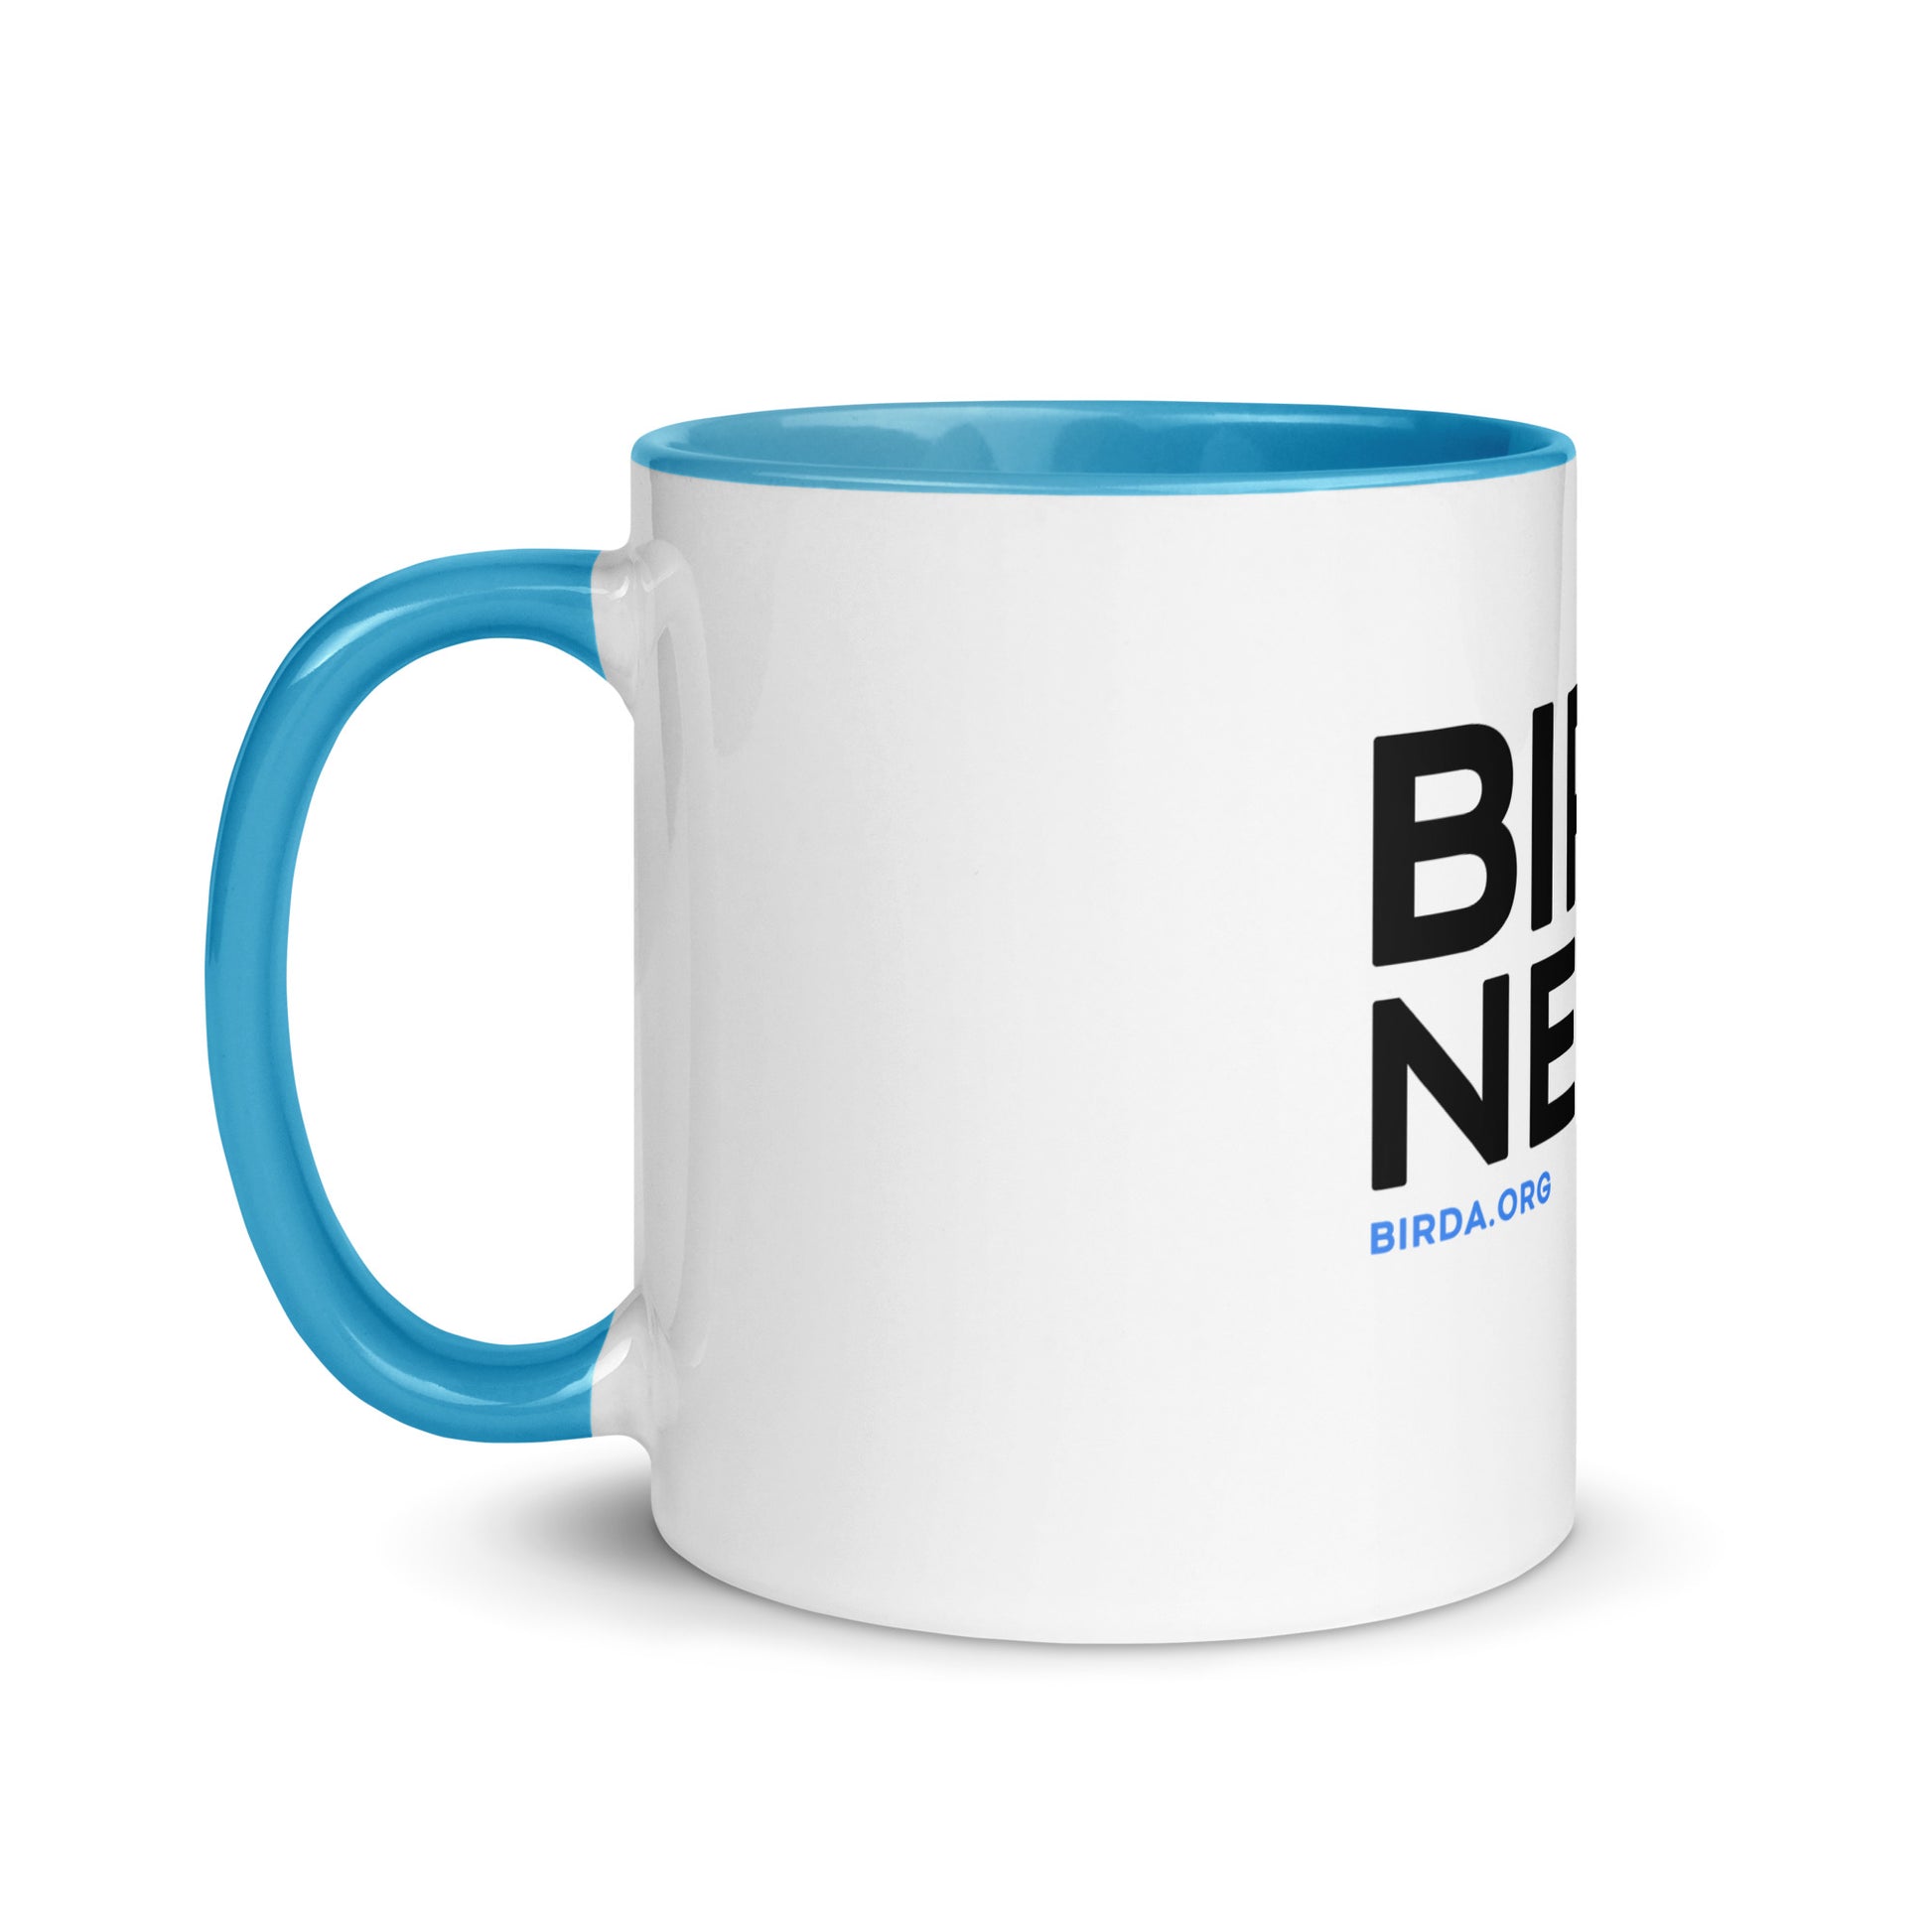 bird nerd mug in blue side angle